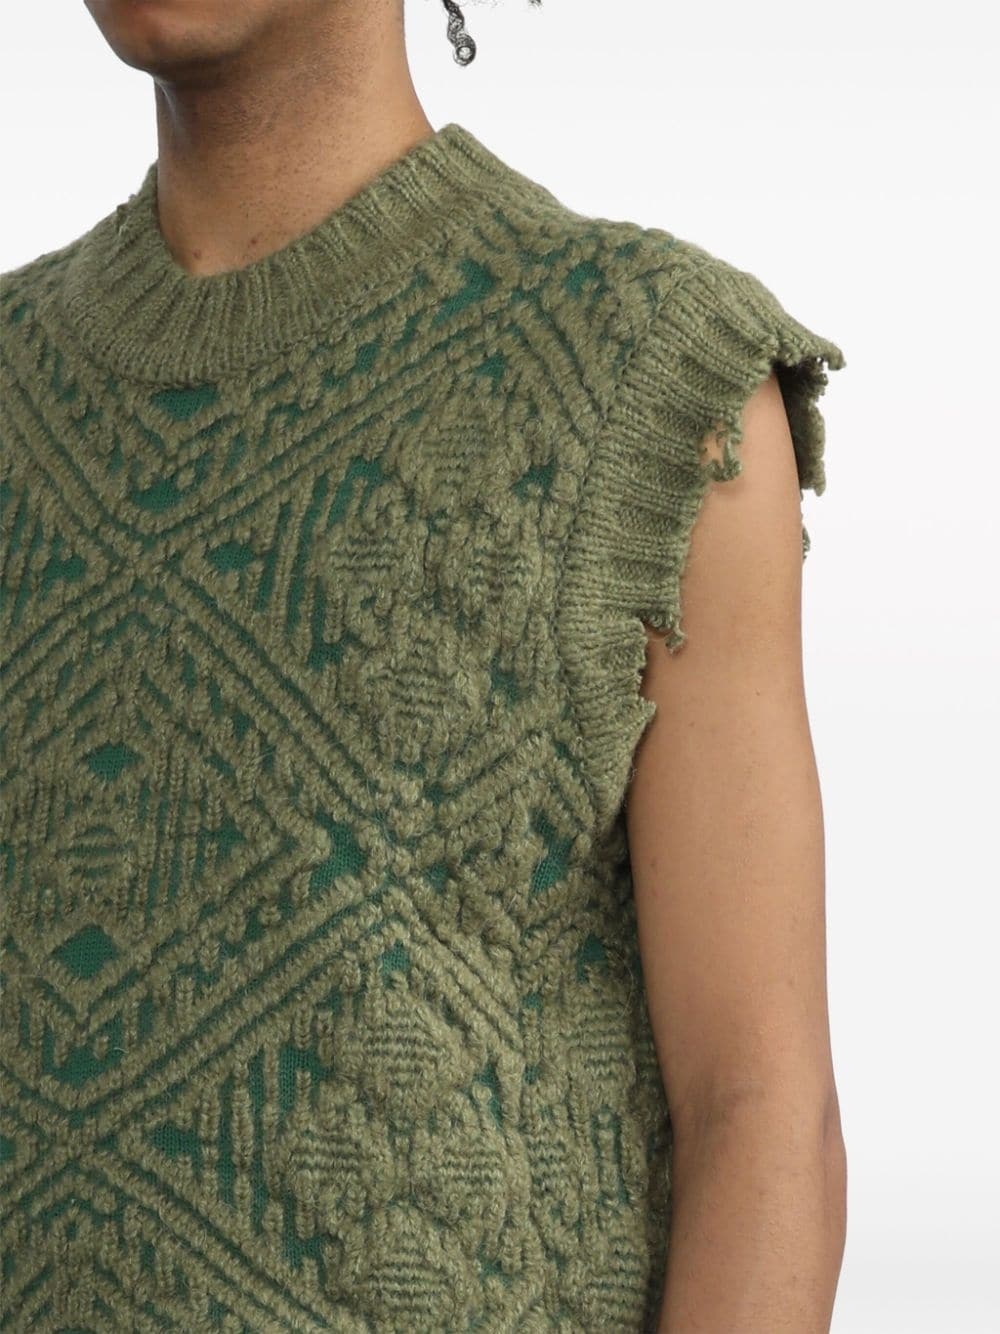 jacquard knitted vest - 5